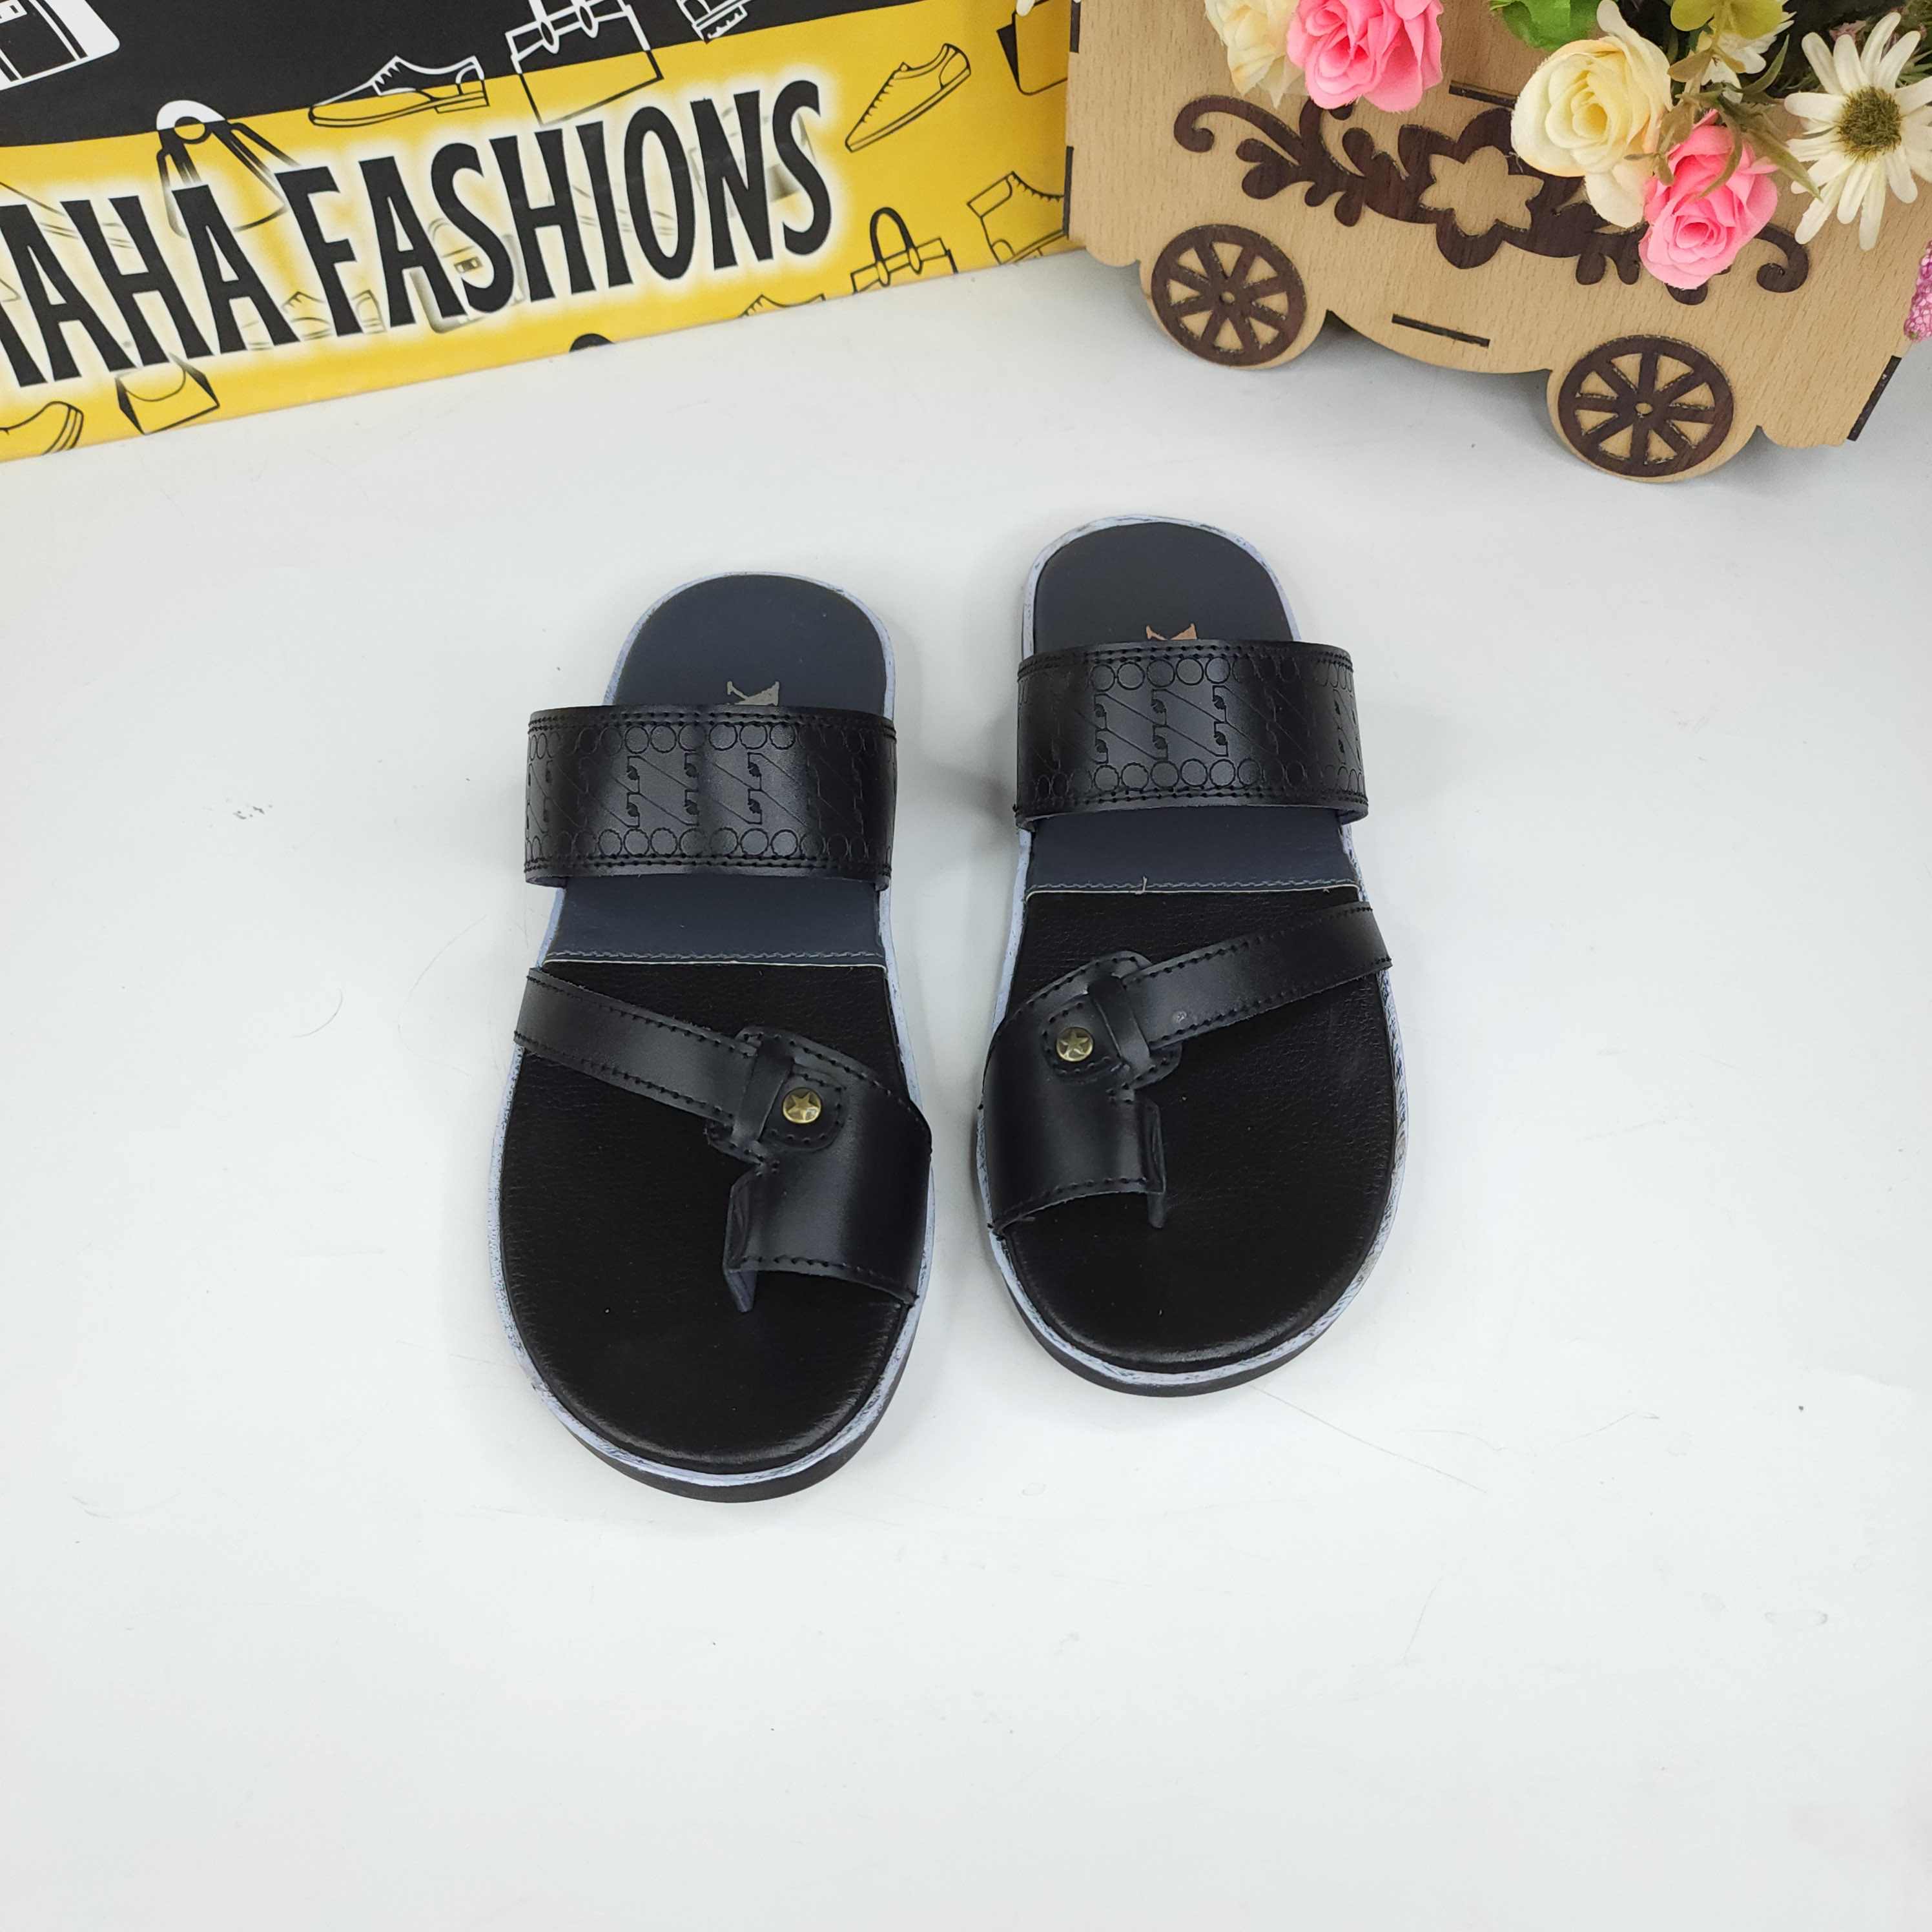 Men Black Slippers - Maha fashions -  